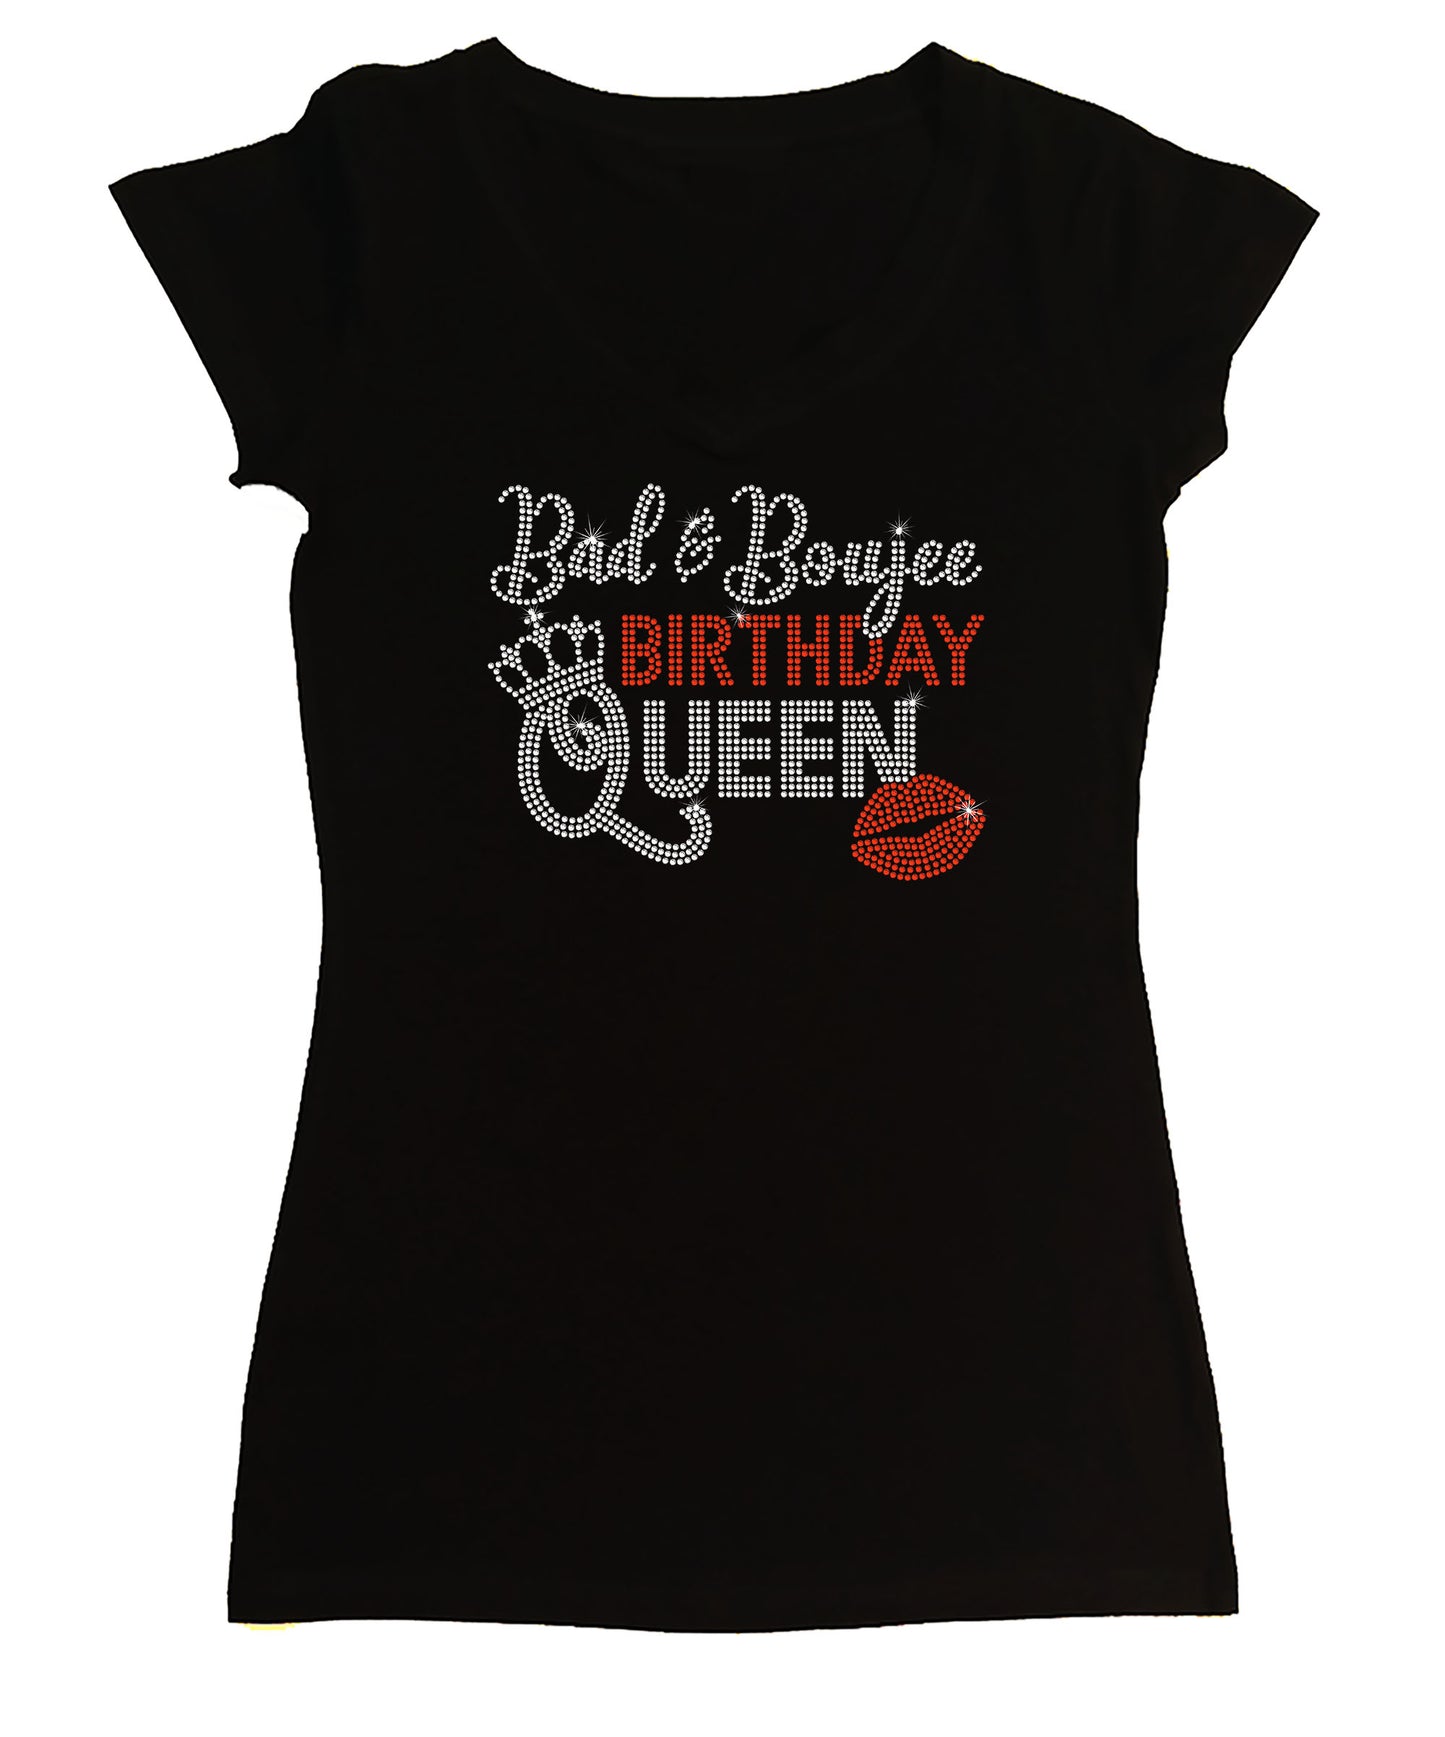 Women's Rhinestone Fitted Tight Snug Bad and Boujee Birthday Queen - Rhinestone Birthday Shirt